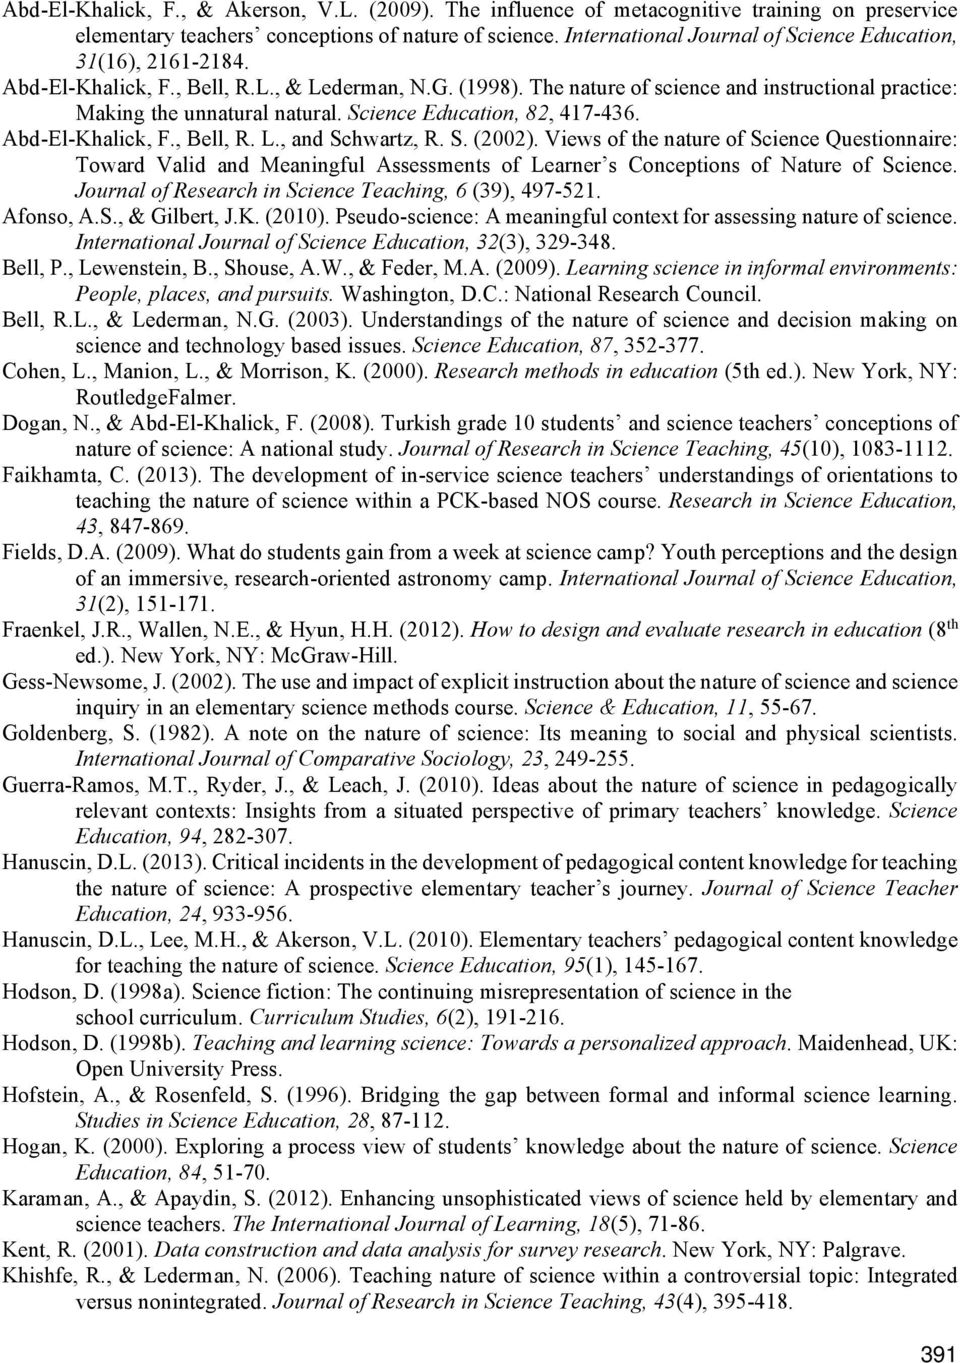 Science Education, 82, 417-436. Abd-El-Khalick, F., Bell, R. L., and Schwartz, R. S. (2002).